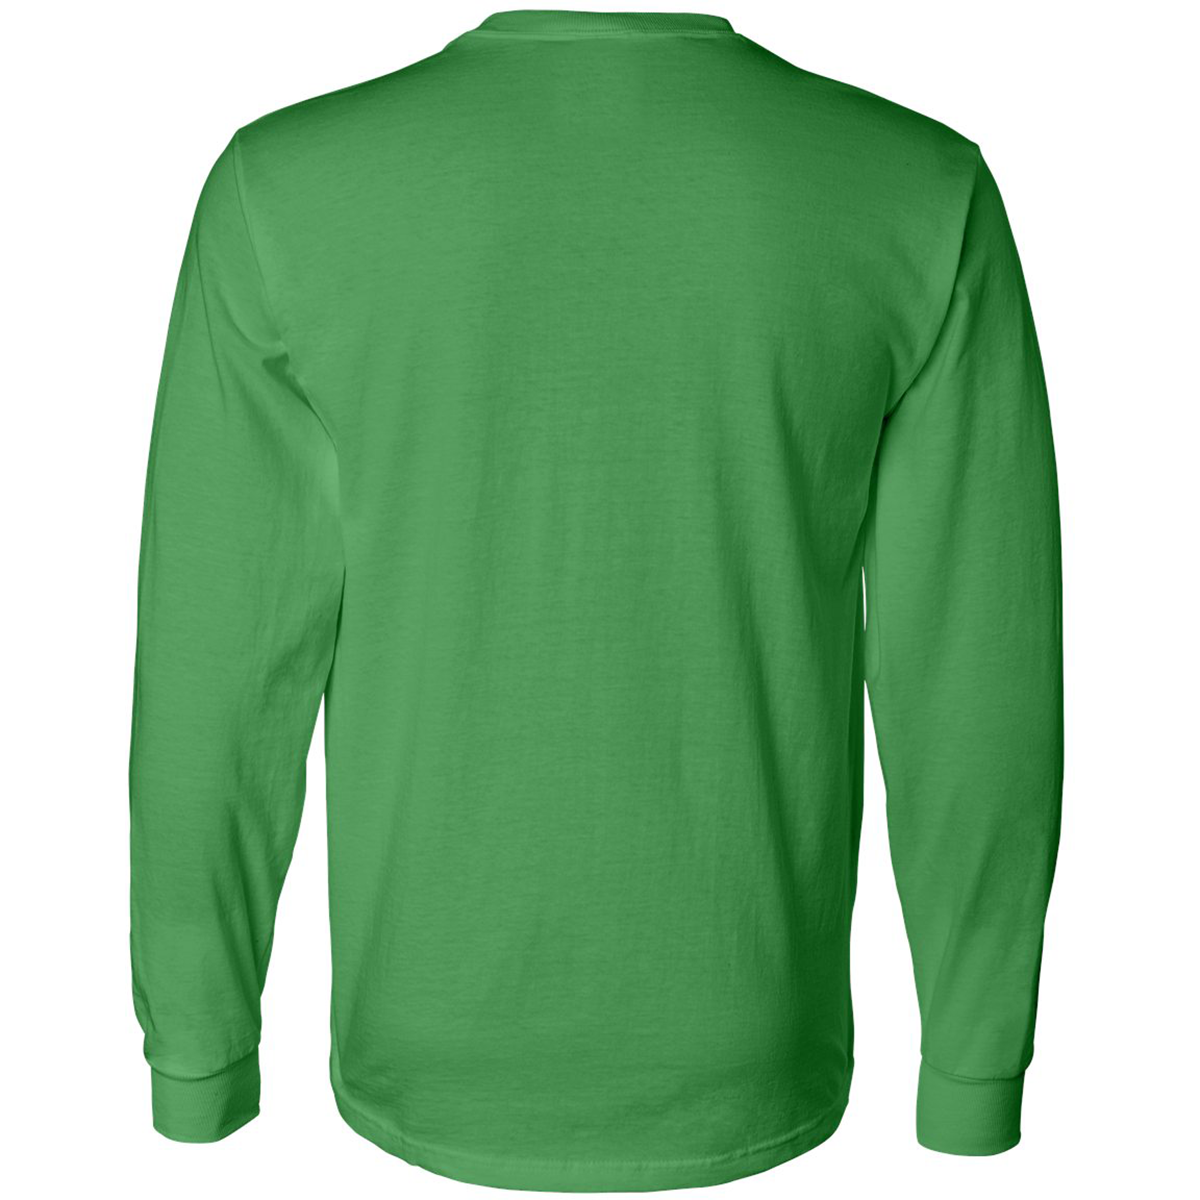 Inktastic Happy St. Patrick's Day- green shamrock cutout Long Sleeve T-Shirt - image 4 of 4